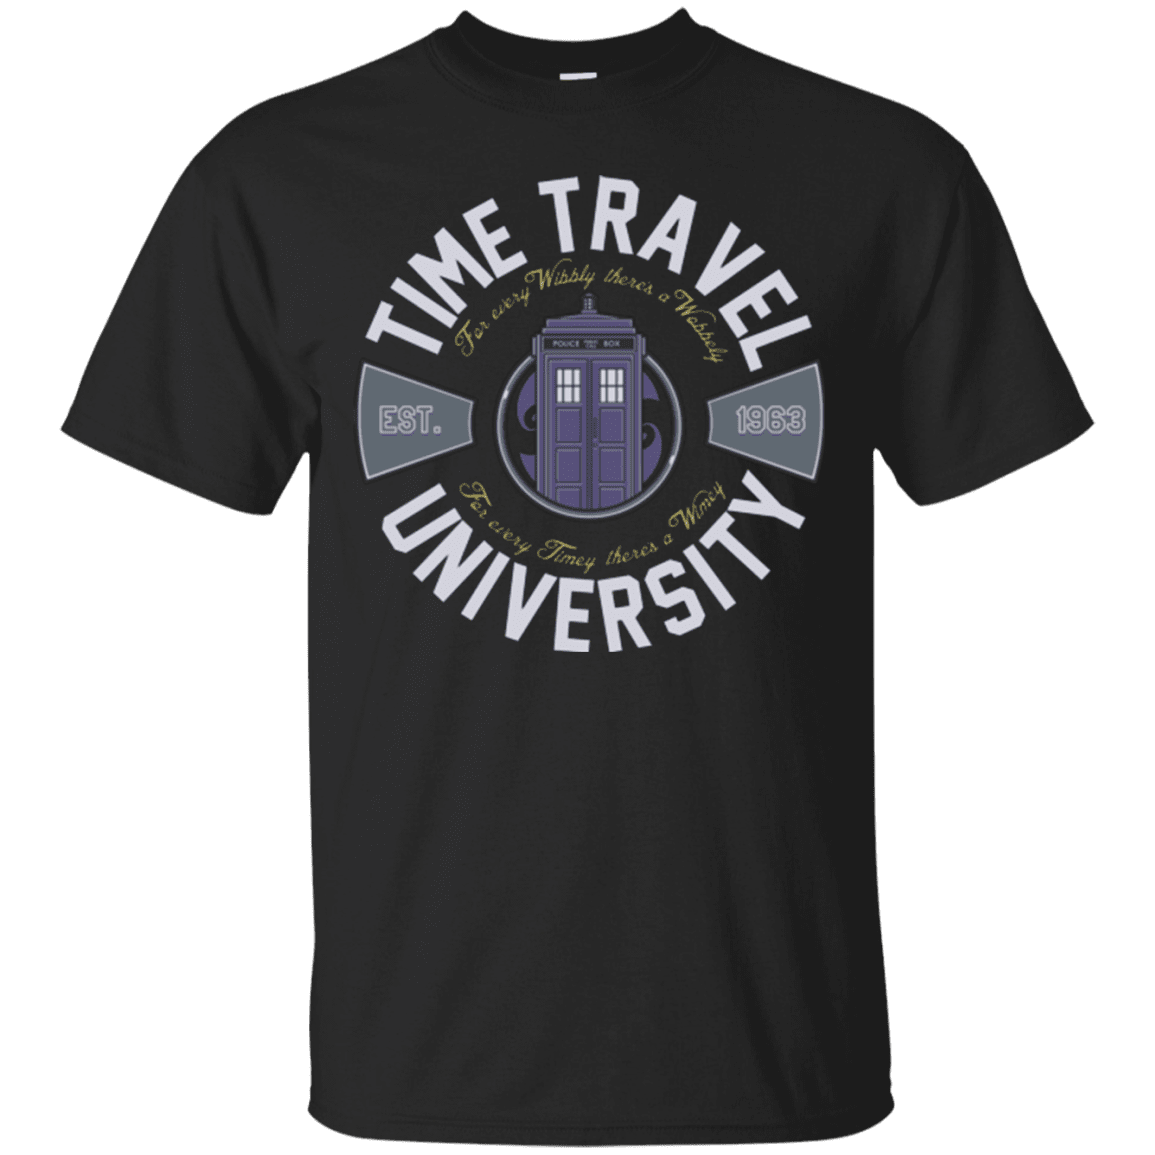 T-Shirts Black / Small Time Travel University T-Shirt